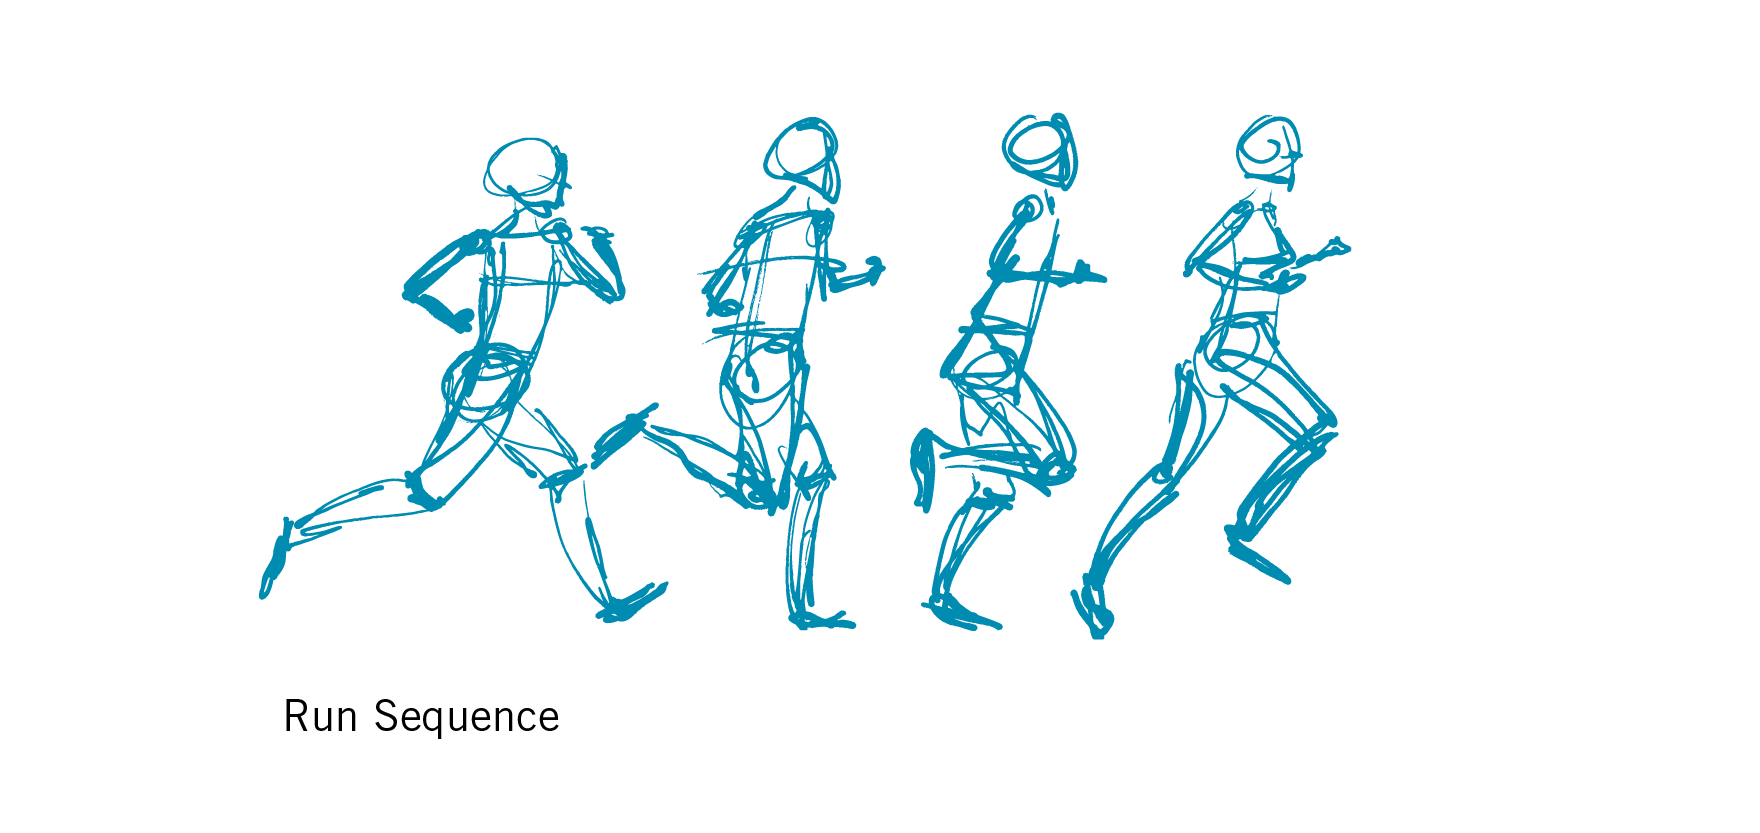 sketched illustration of human figure running